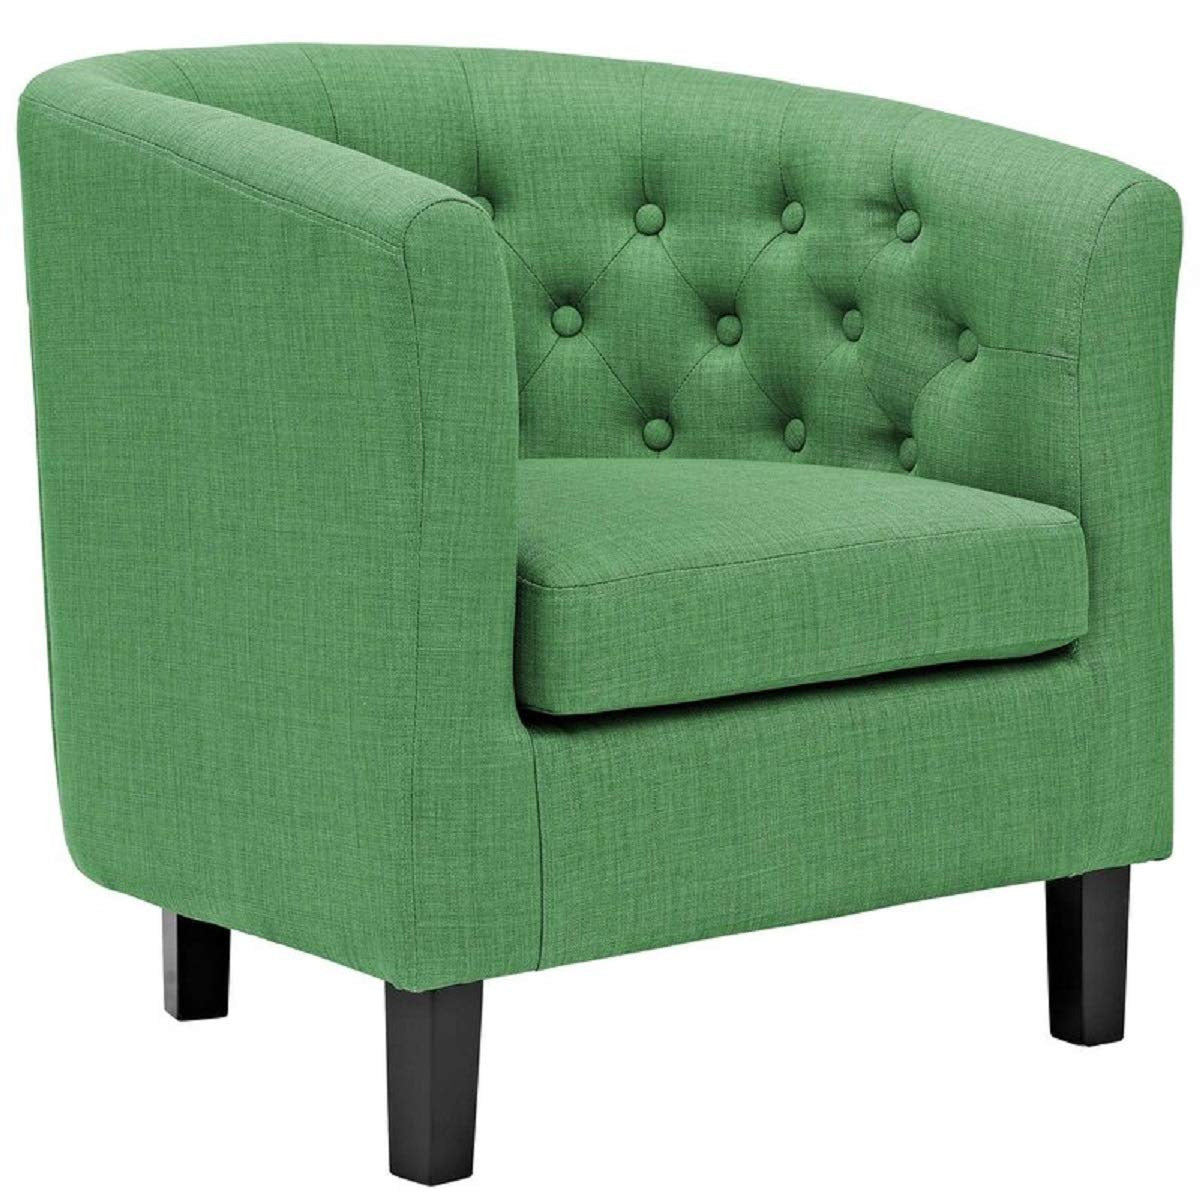 Designer Sofa Set:- ZIAA 3+1+1 Fabric Luxury Furniture Sofa Set